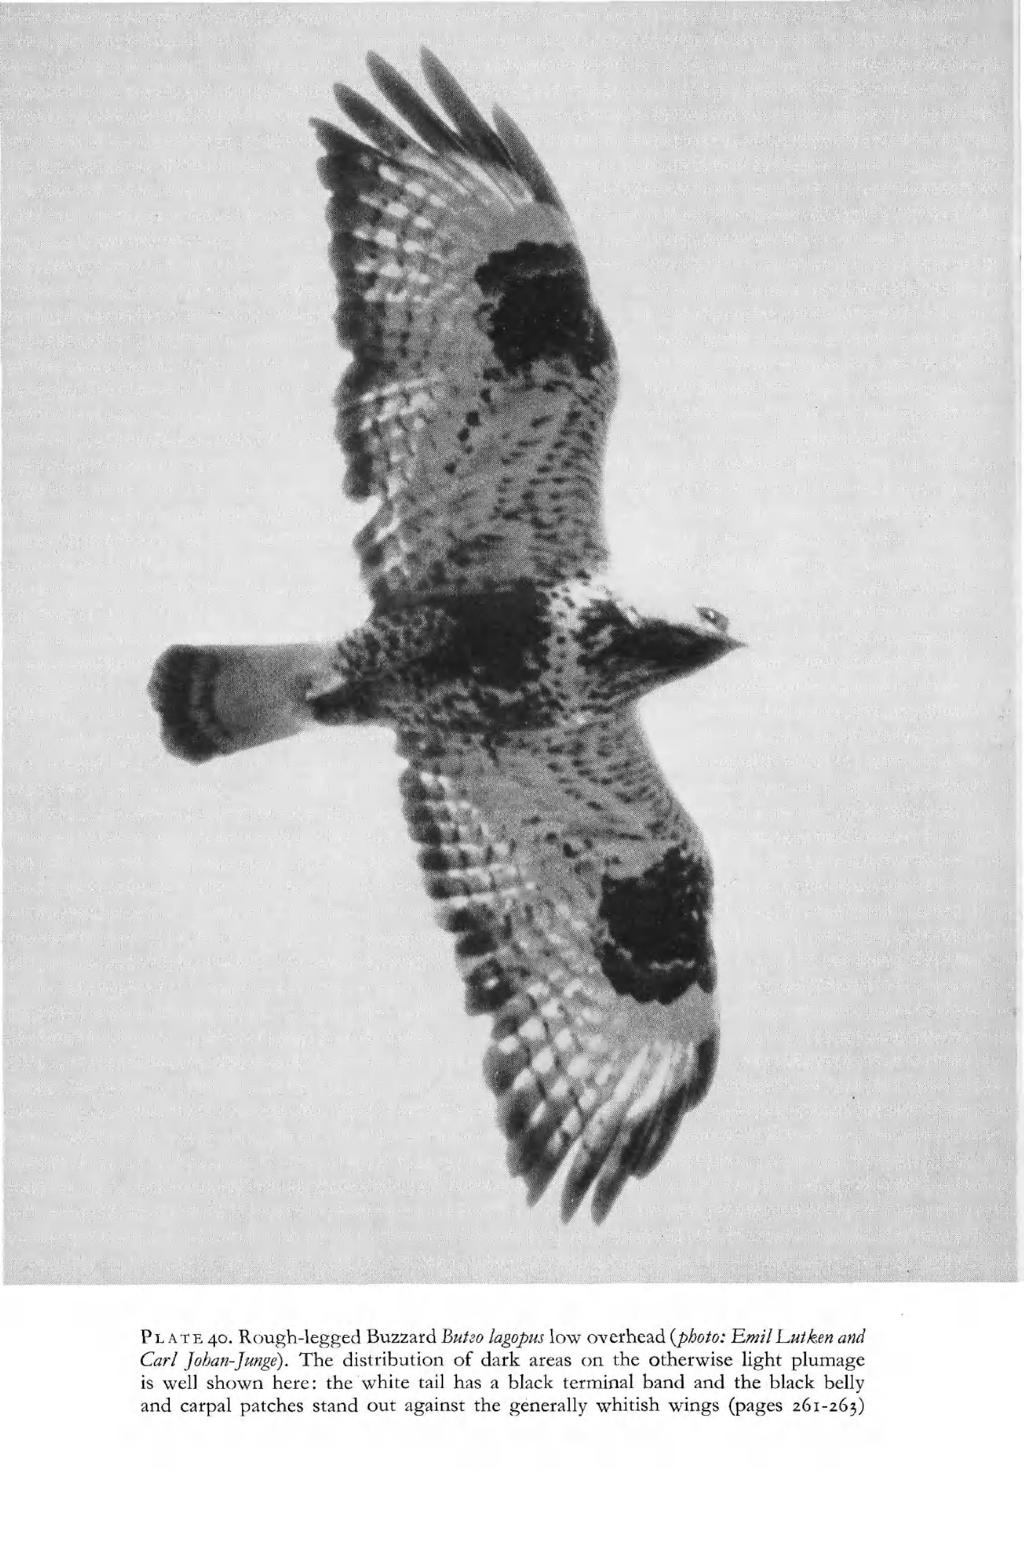 P L A T E 40. Rough-legged Buzzard Butso lagopus low overhead {photo: Until l^utken and Carl johan-junge).